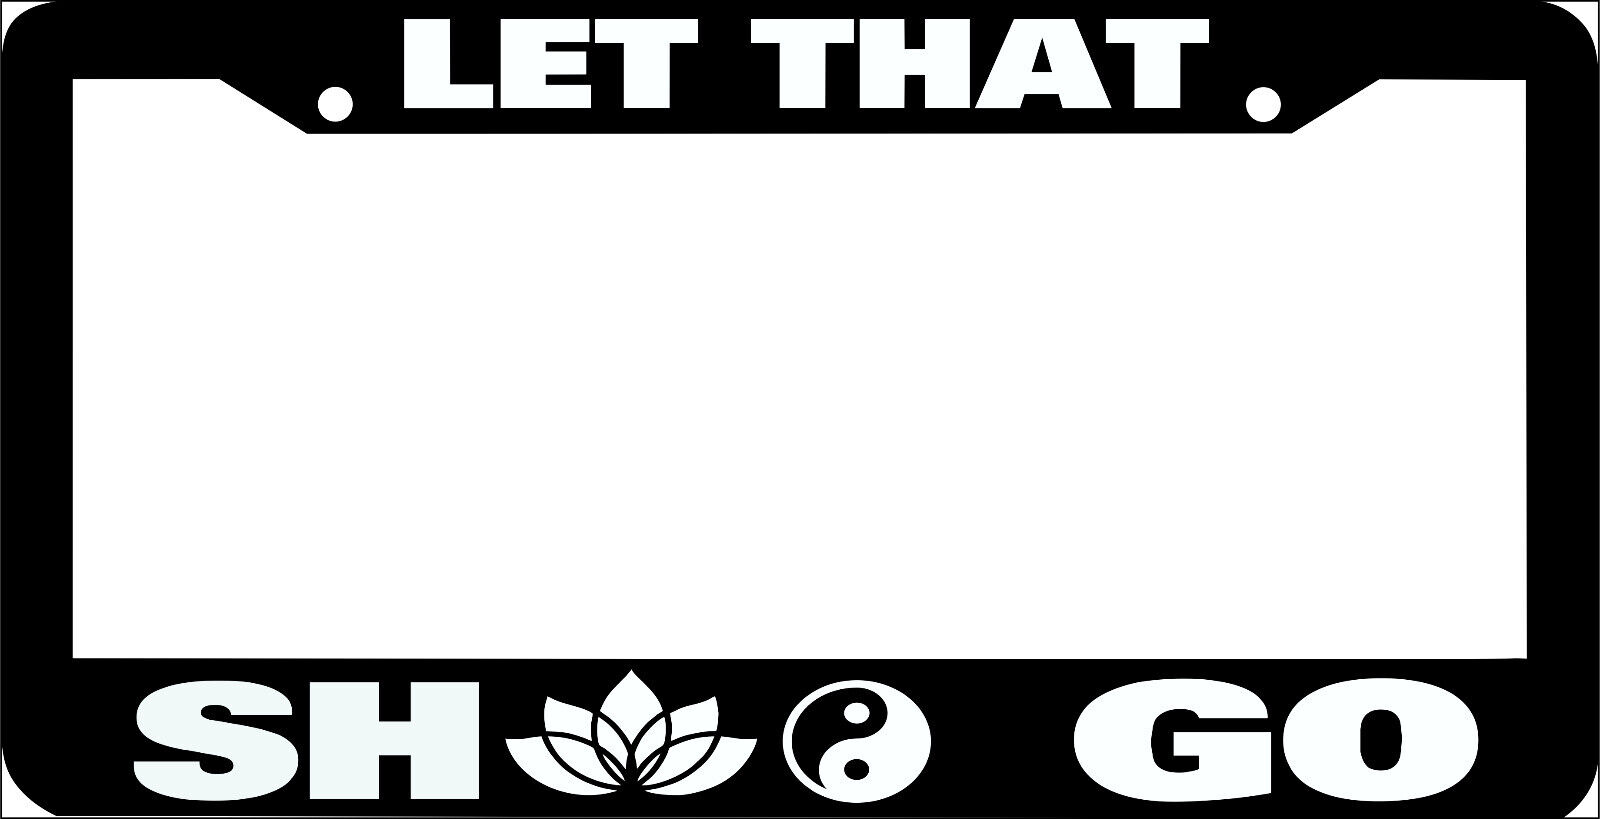 LET THAT SH1T GO namaste lotus flower yin & yang  funny License Plate Frame